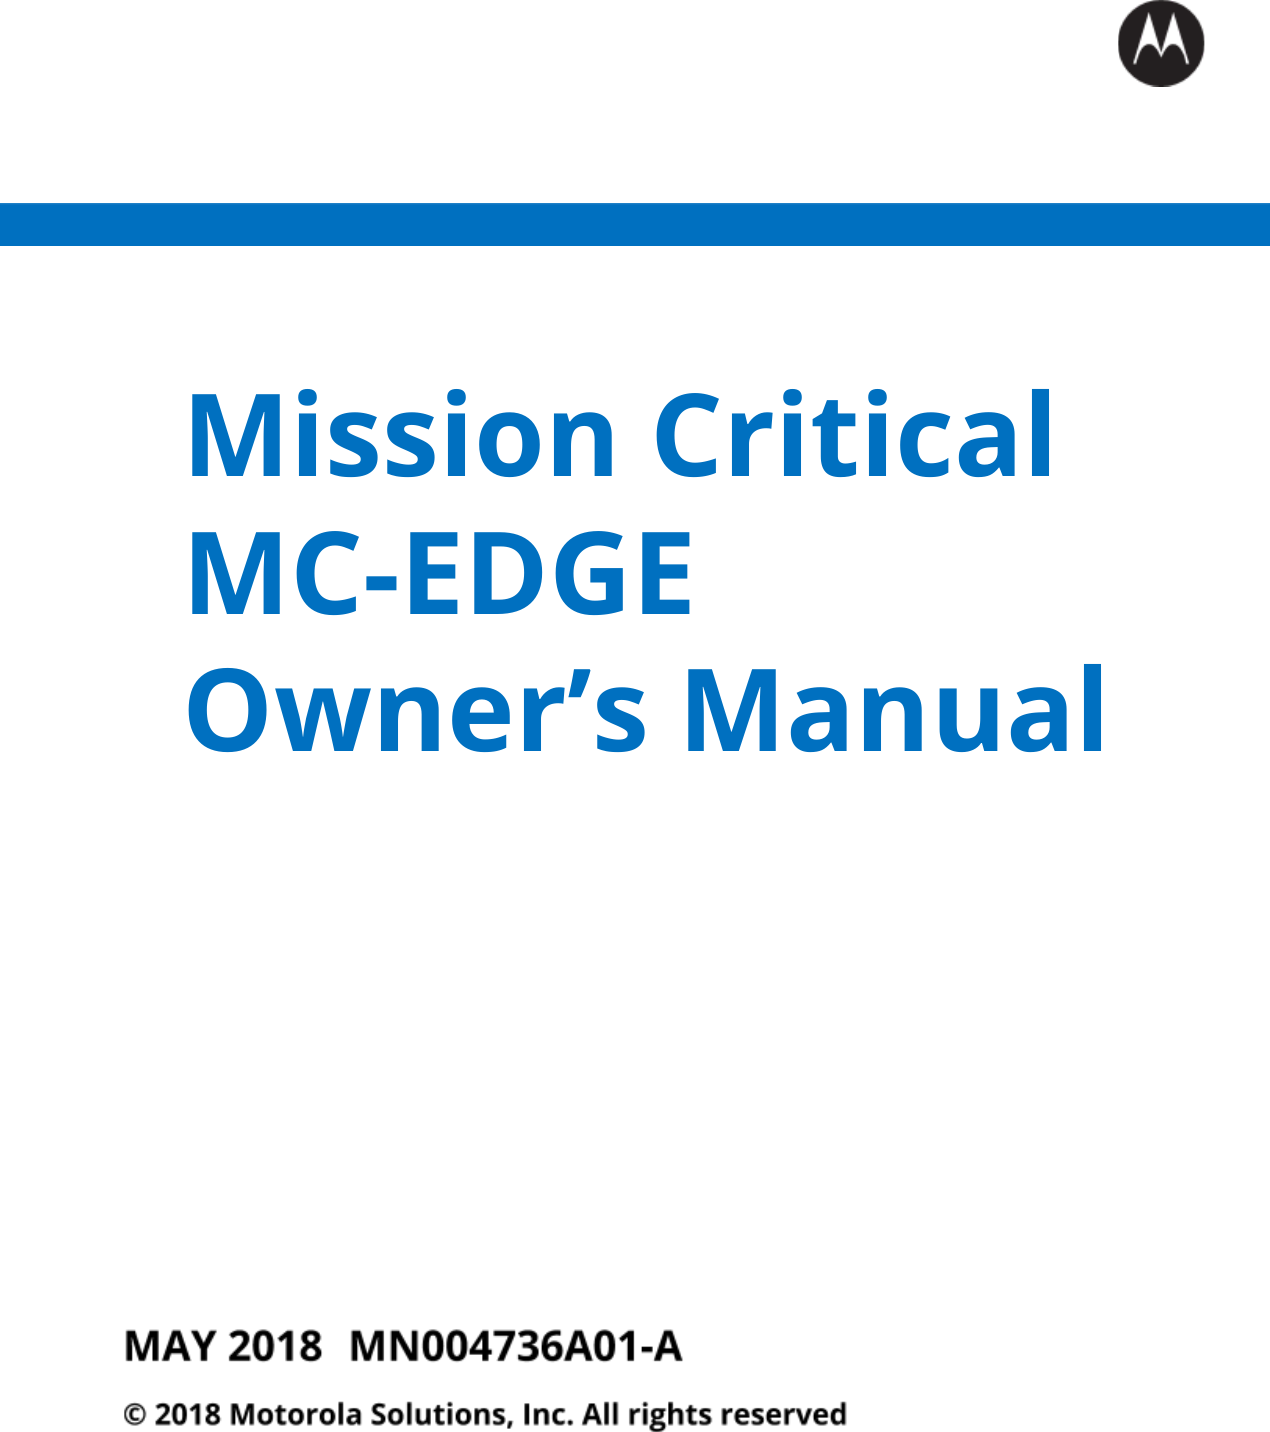      Mission CriticalMC-EDGEOwner’s Manual  